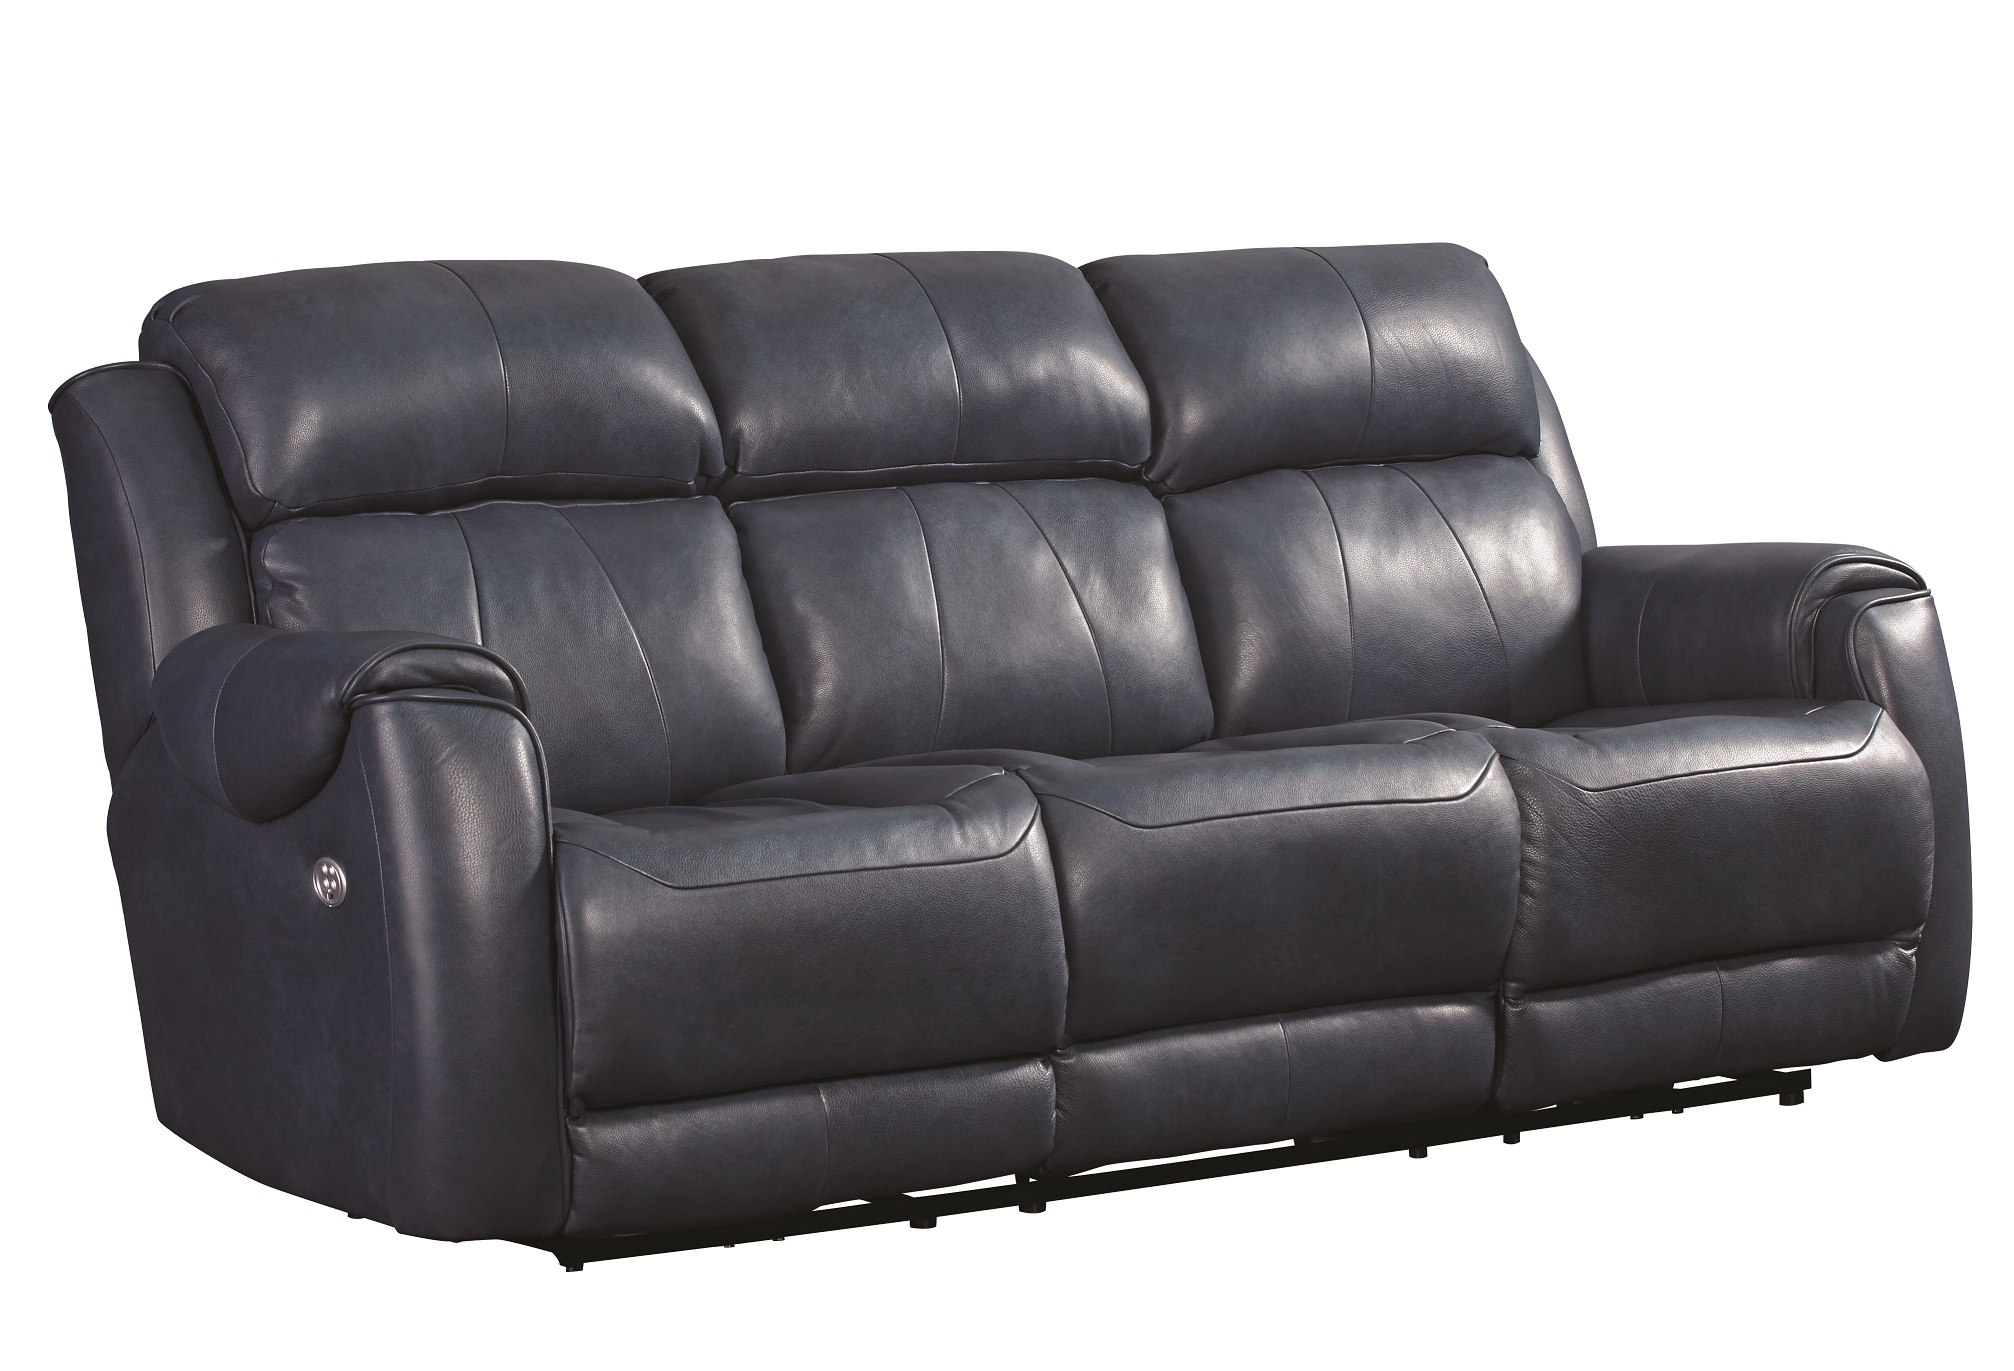 757-safe-bet-sofa-in-903-60-fresca-ultramarine